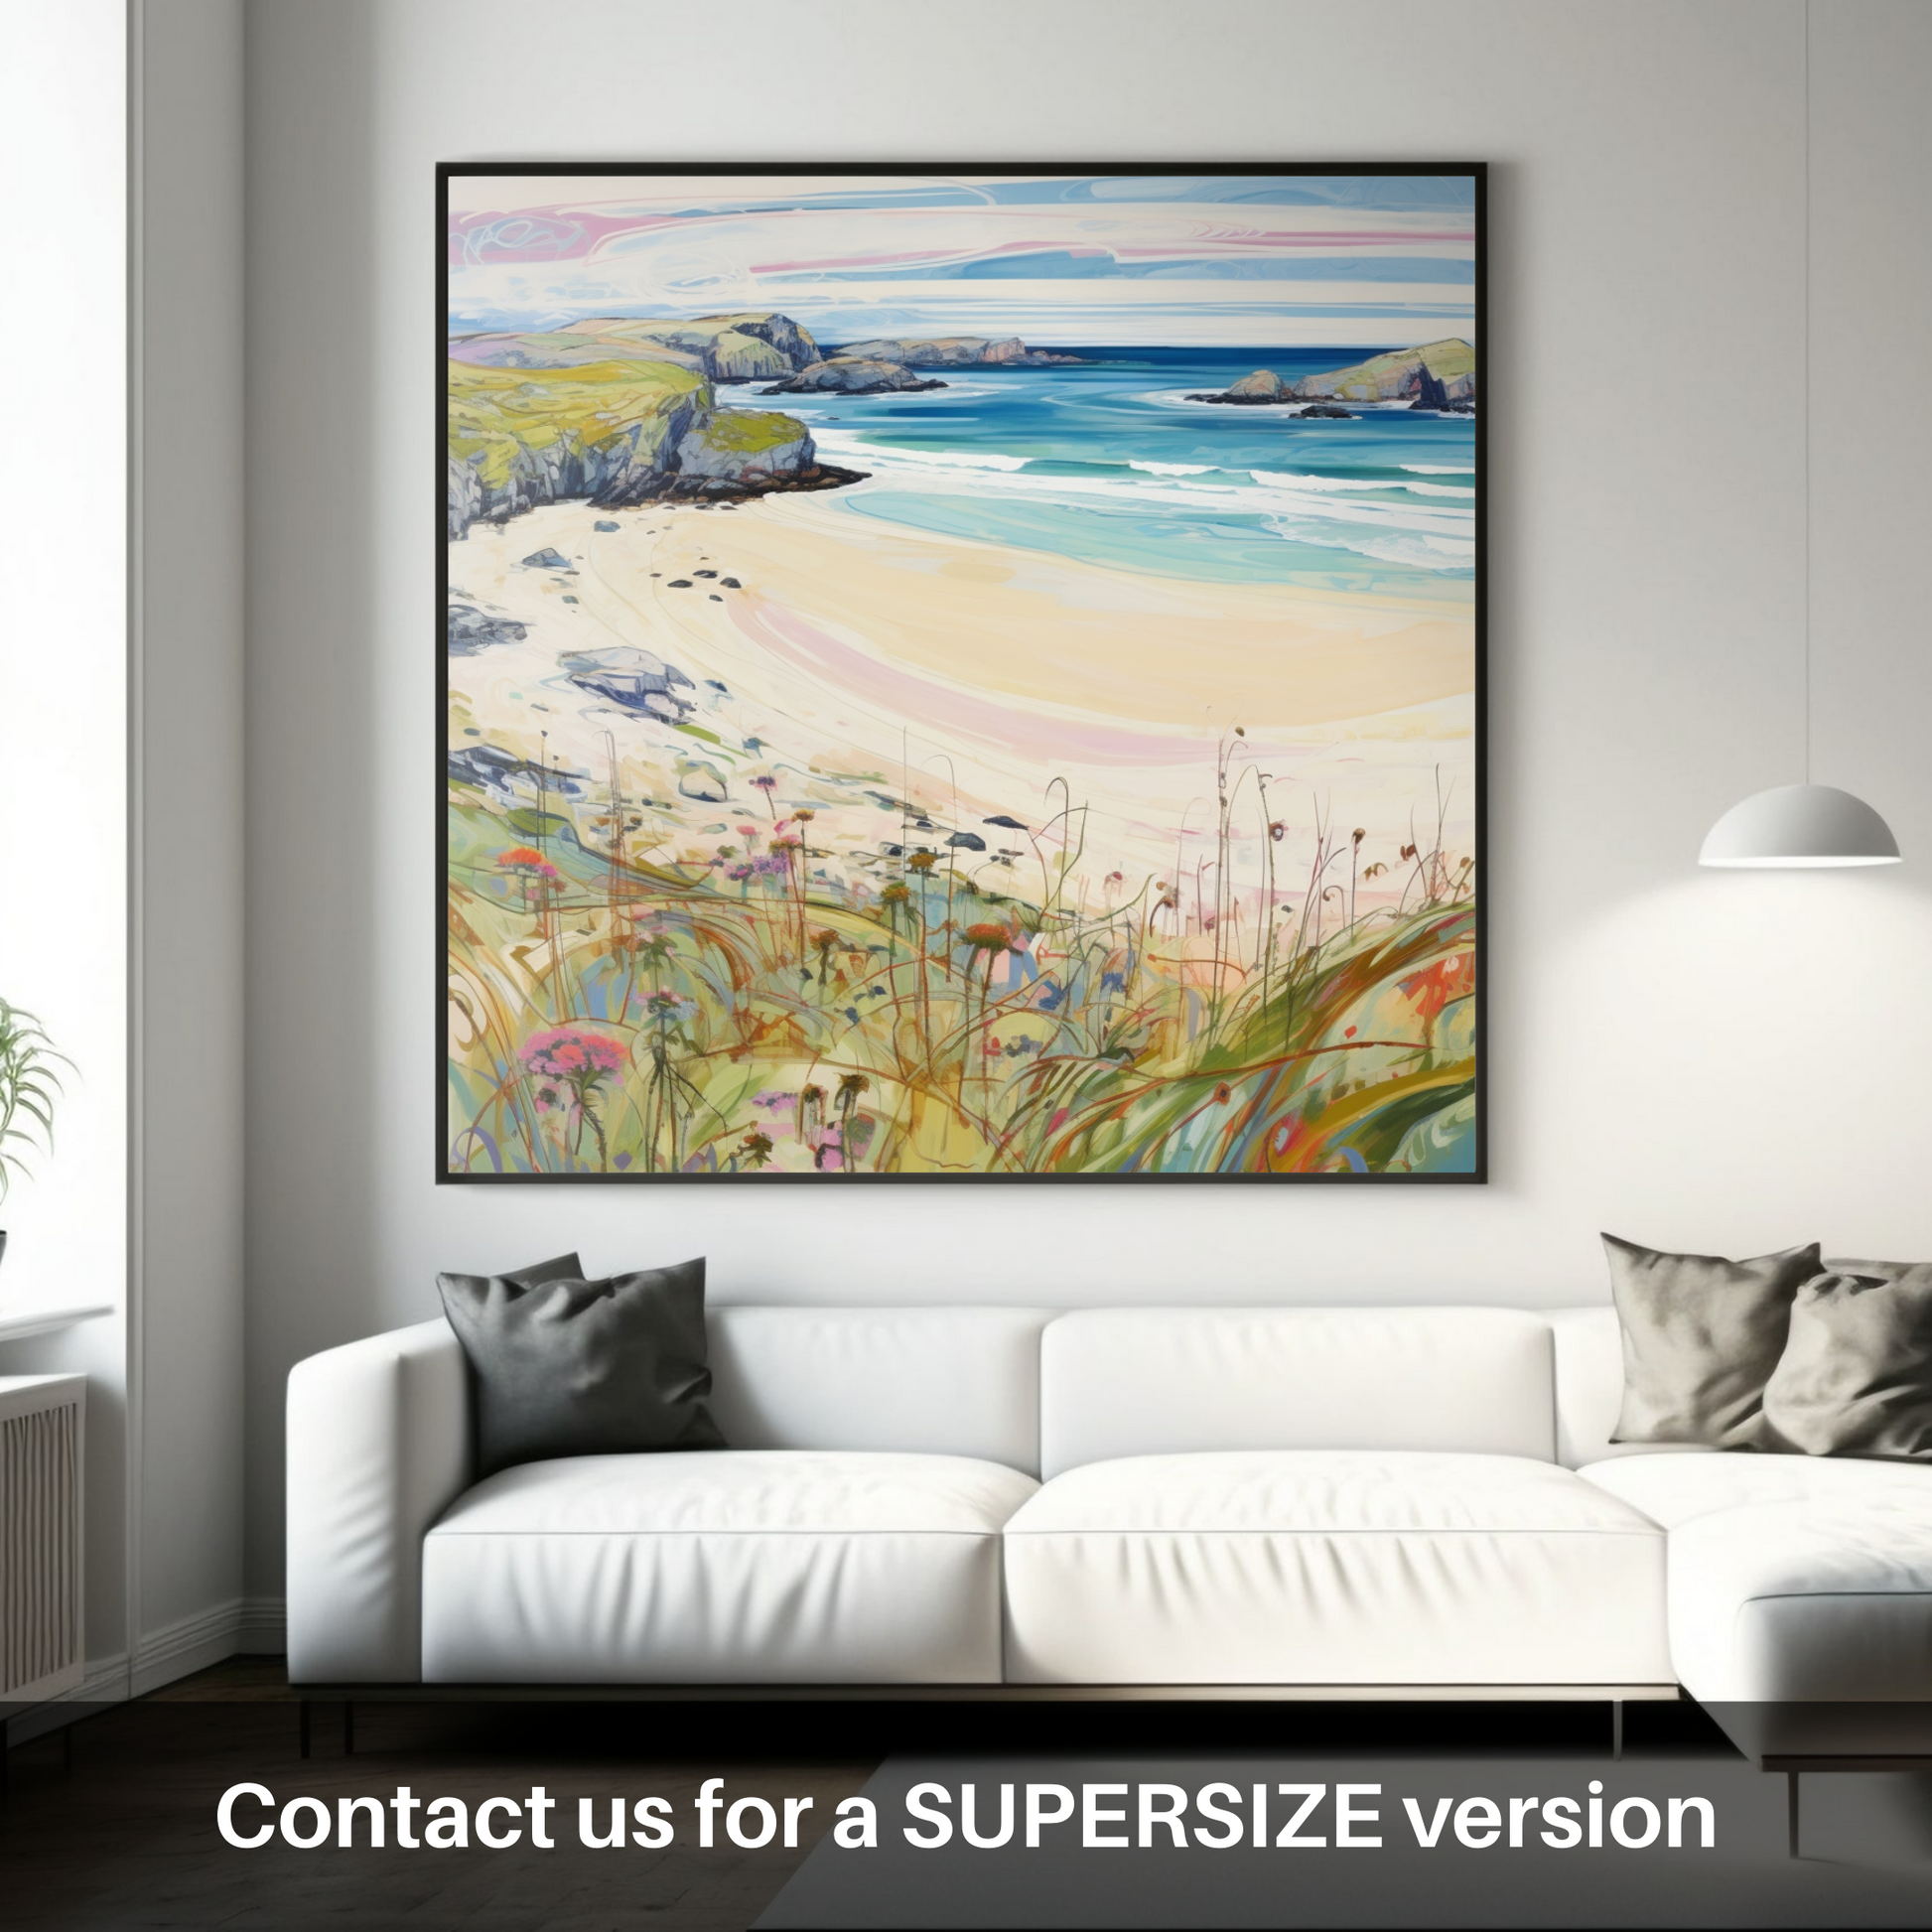 Huge supersize print of Durness Beach, Sutherland in summer